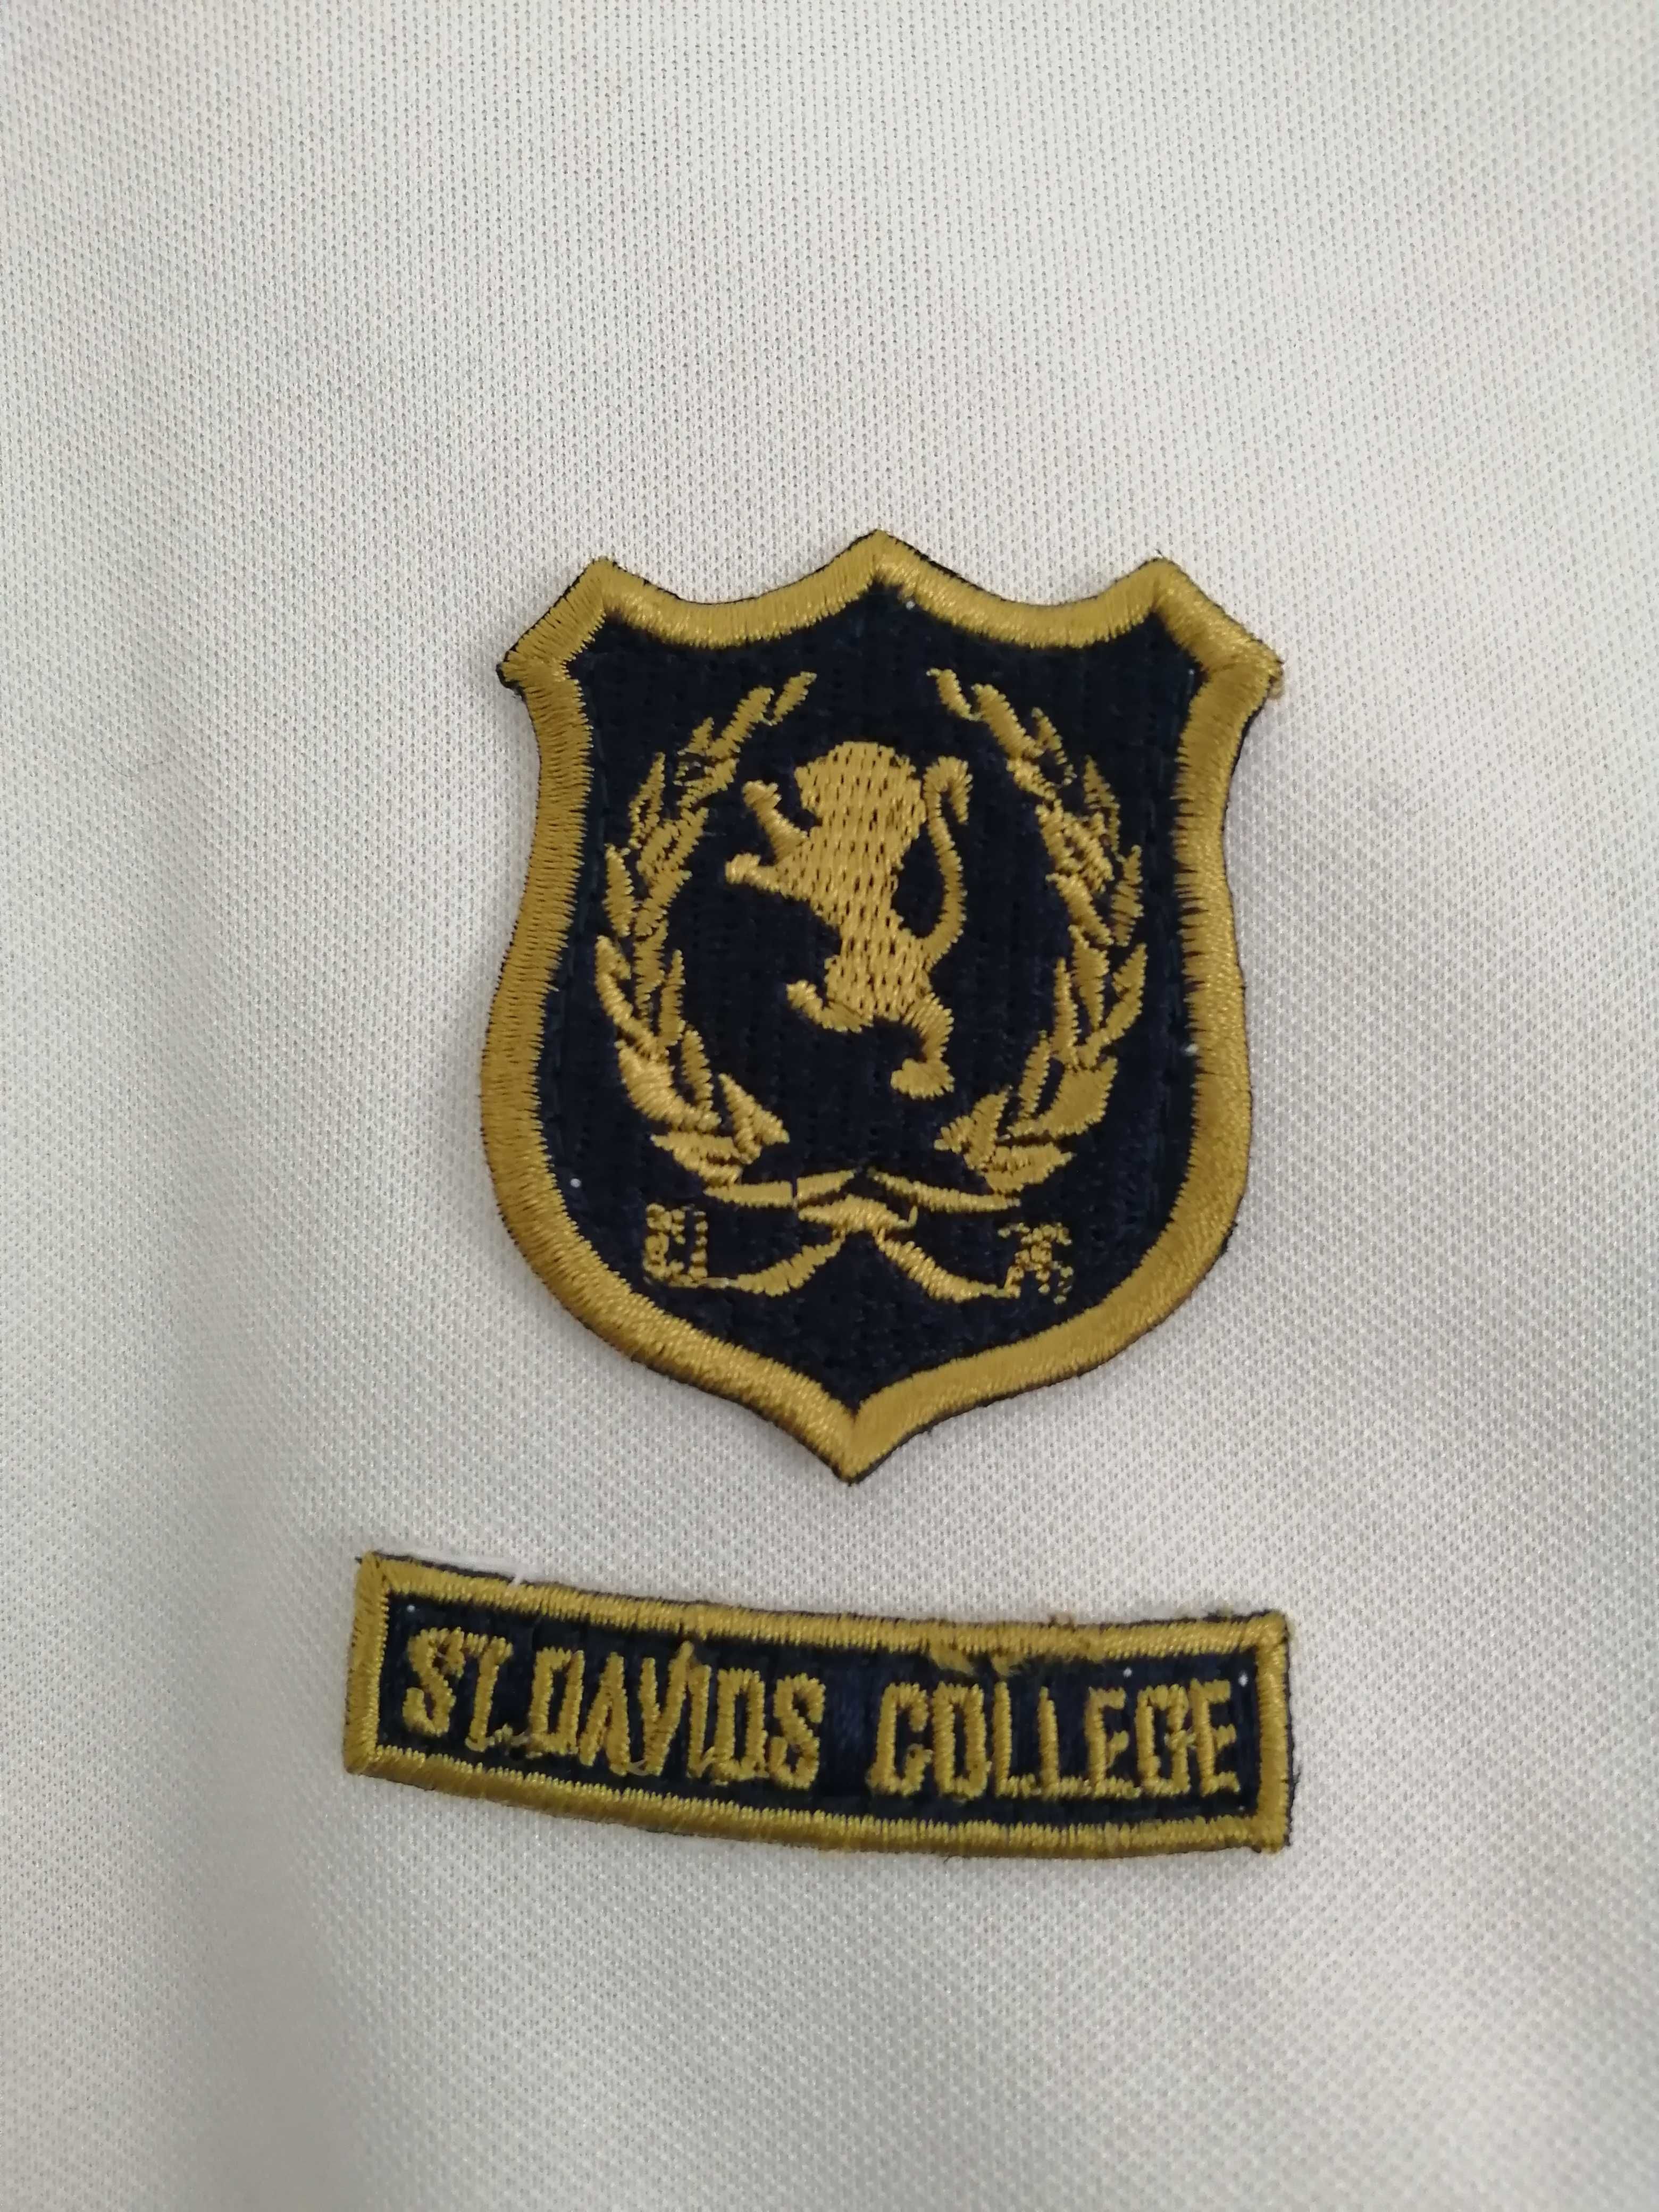 Blusão/uniforme vintage